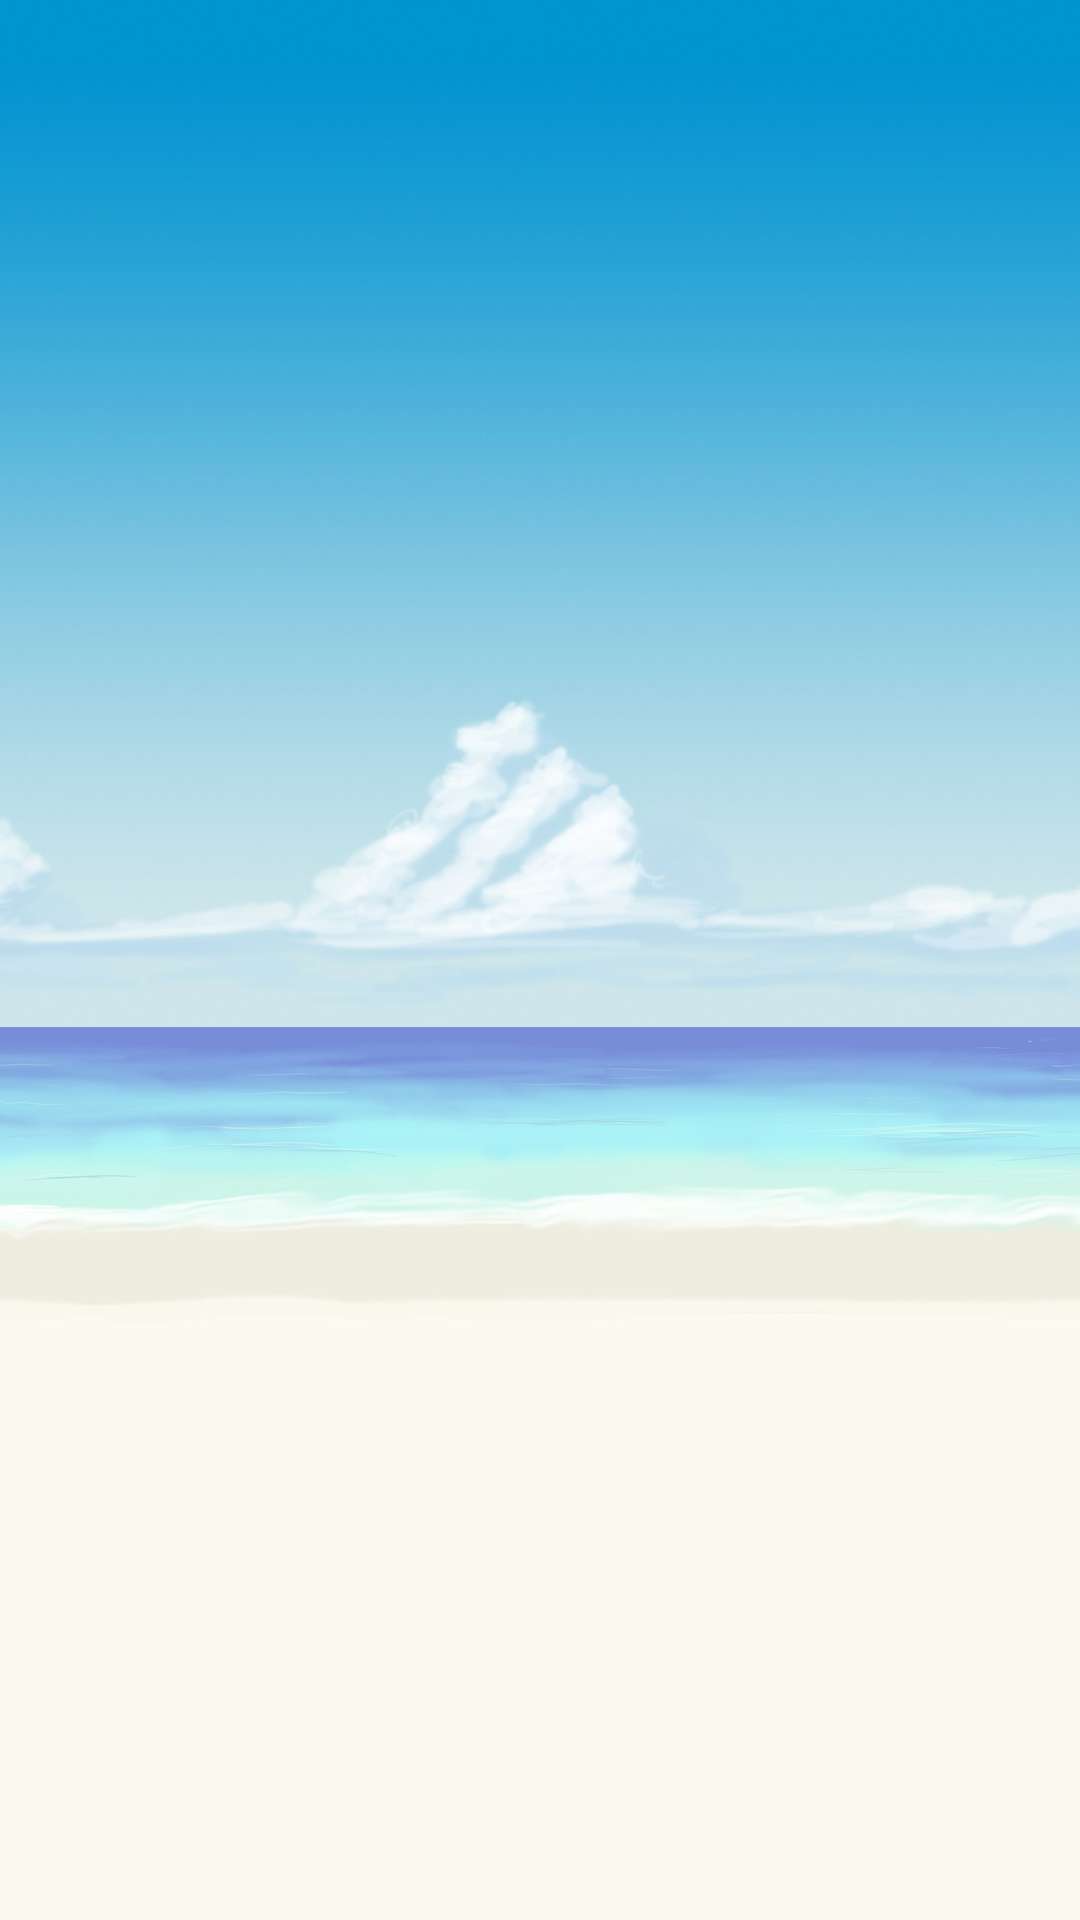 770 Anime Beach Illustrations RoyaltyFree Vector Graphics  Clip Art   iStock